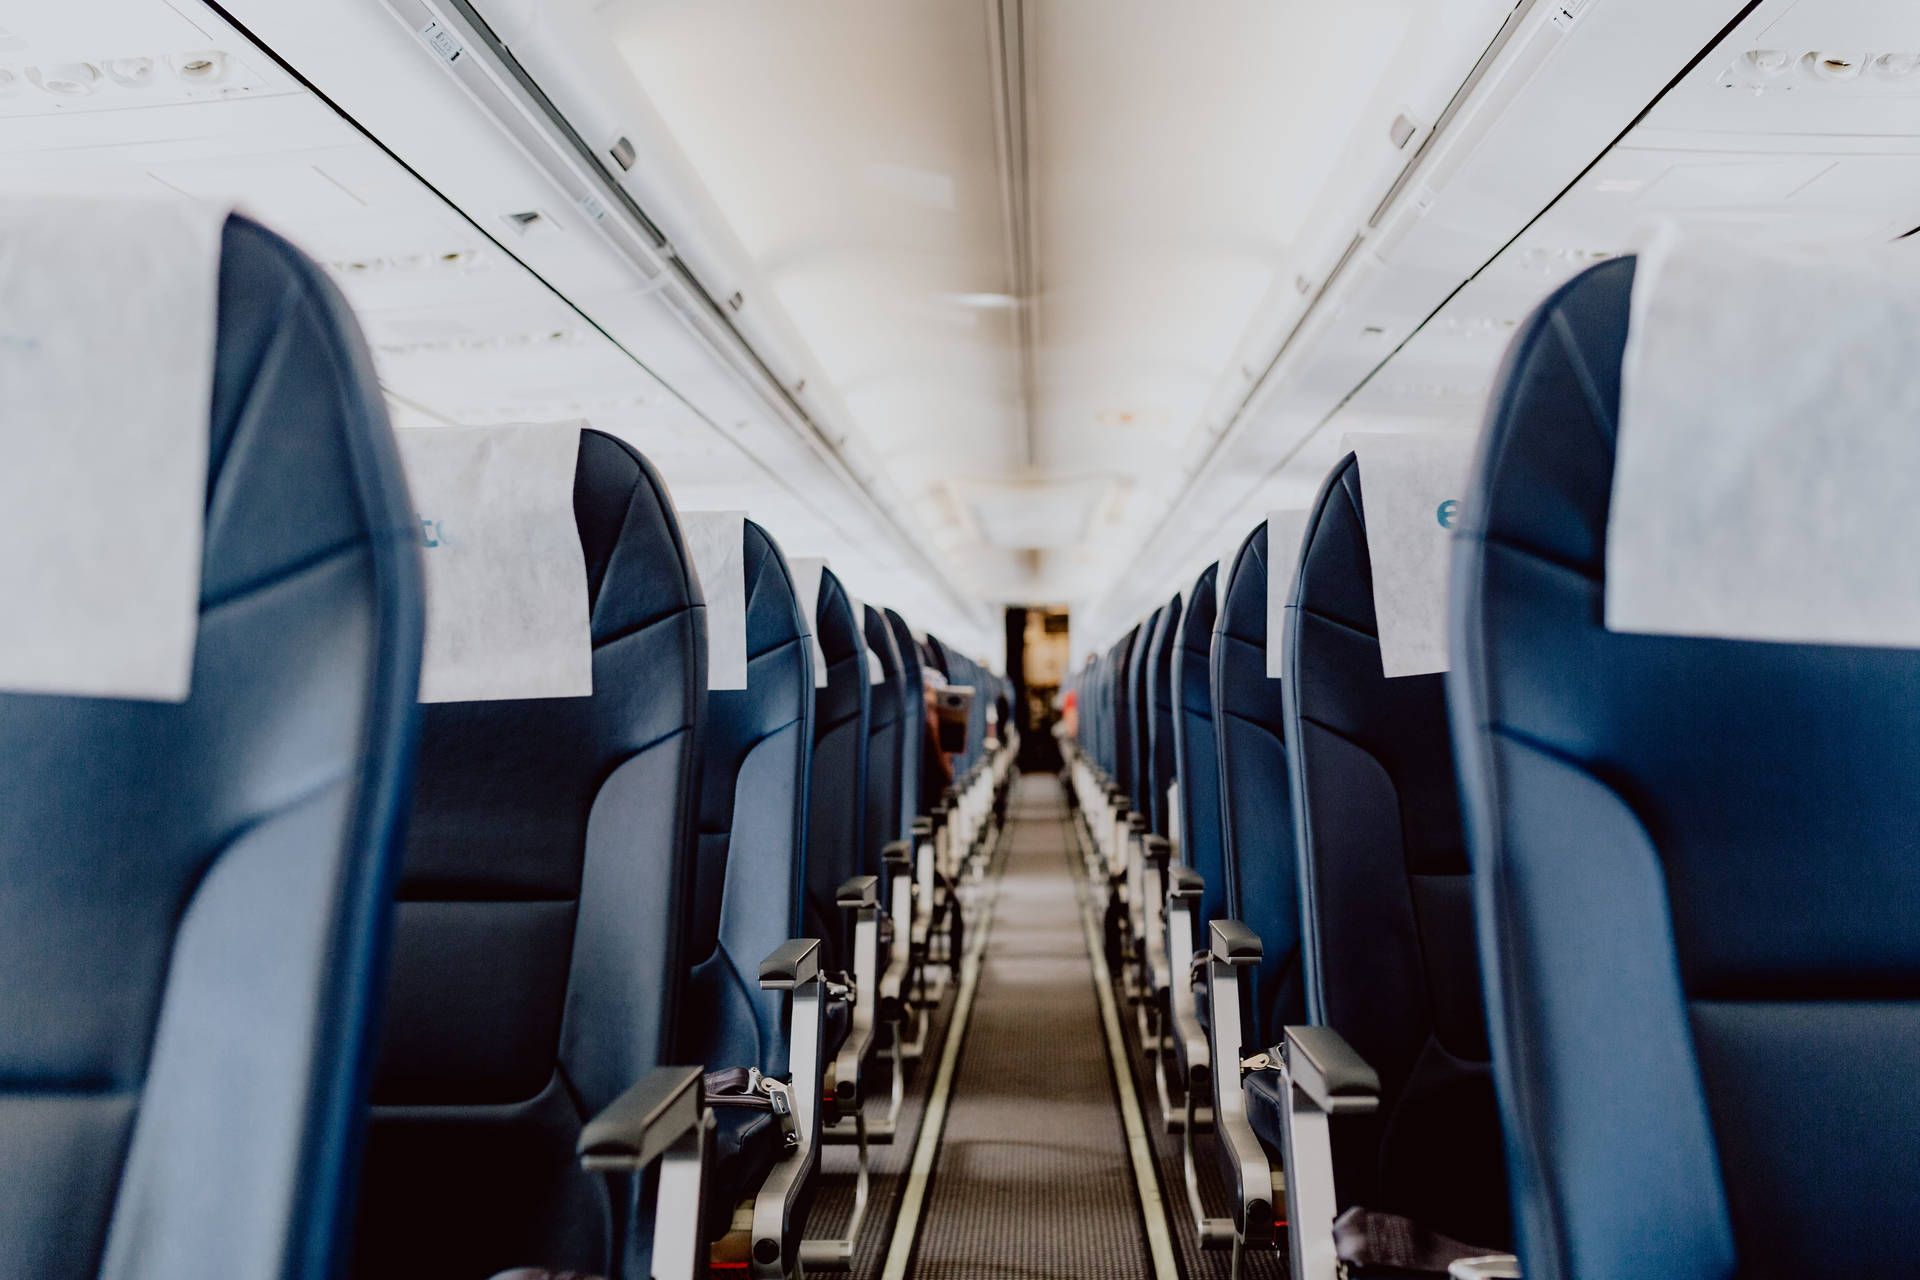 Chairs Inside Airplane 4k